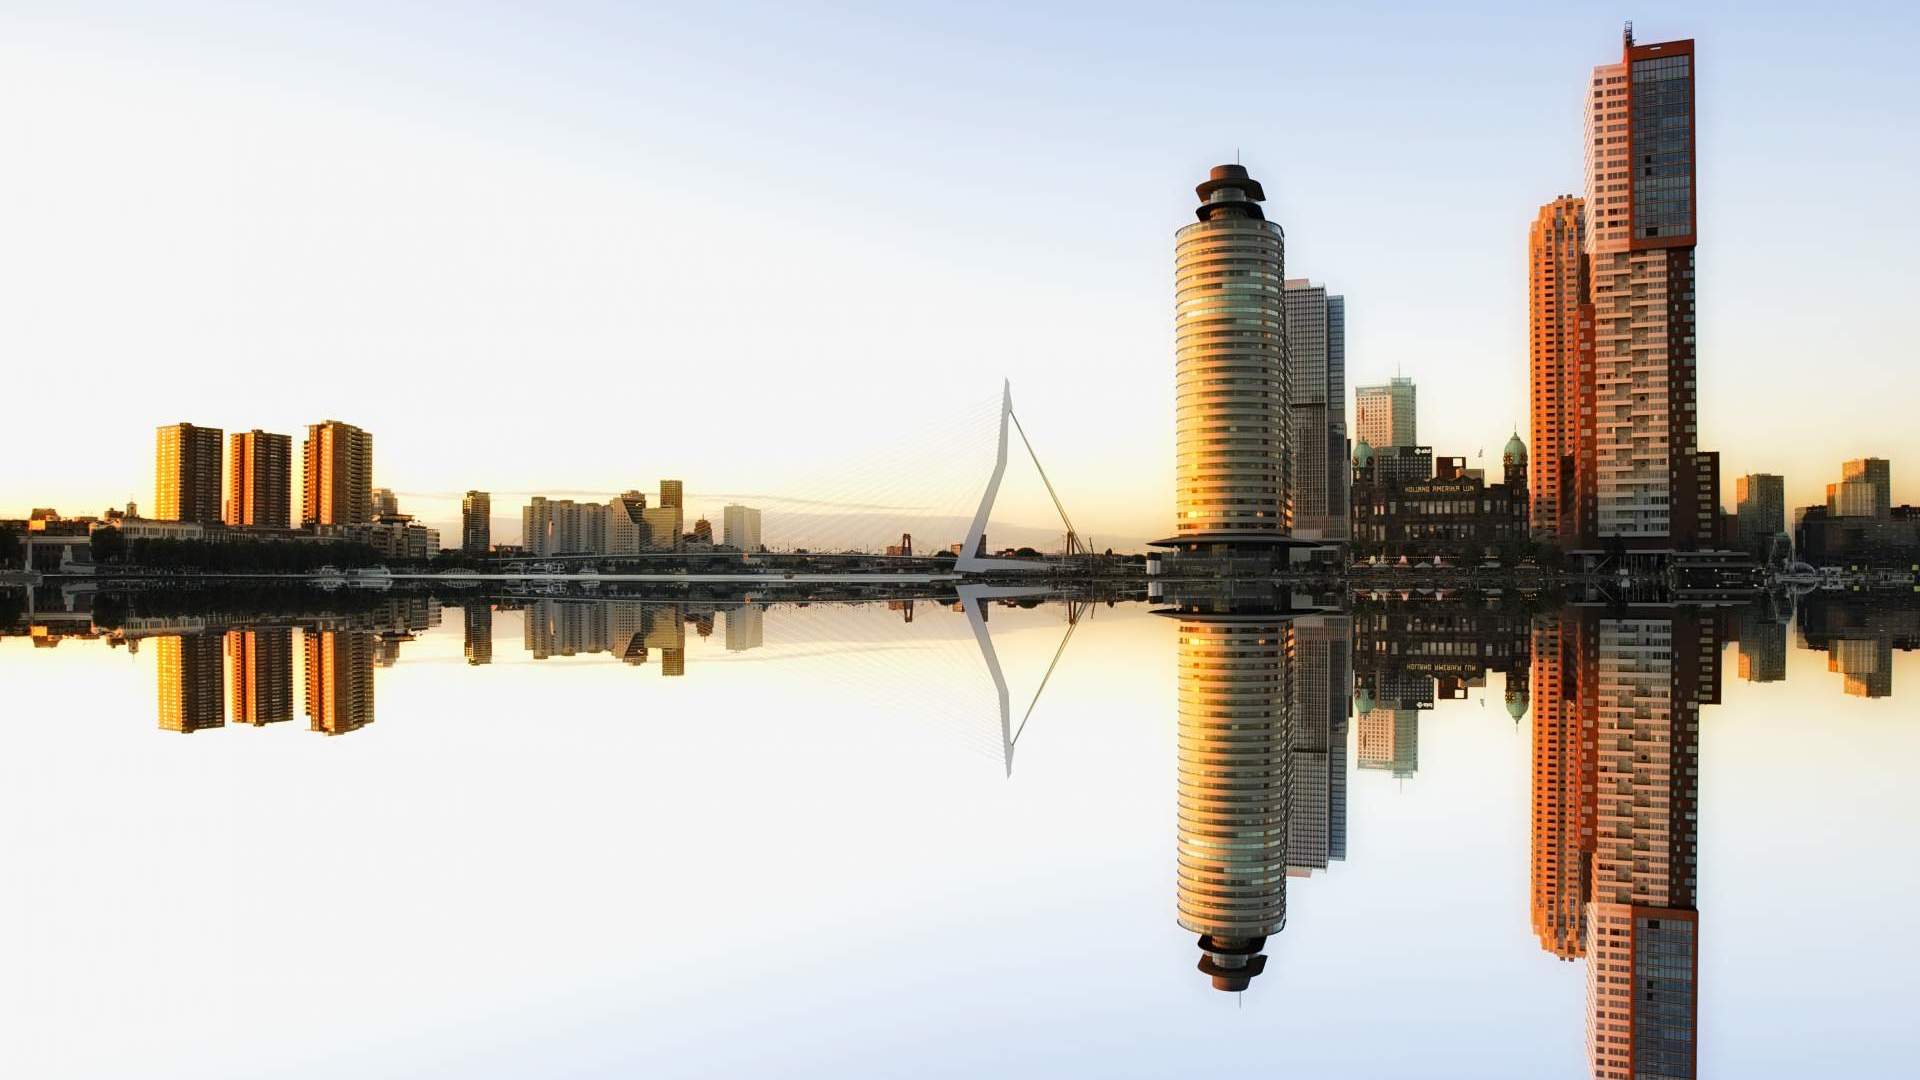 Rotterdam, Den Haag & Delft